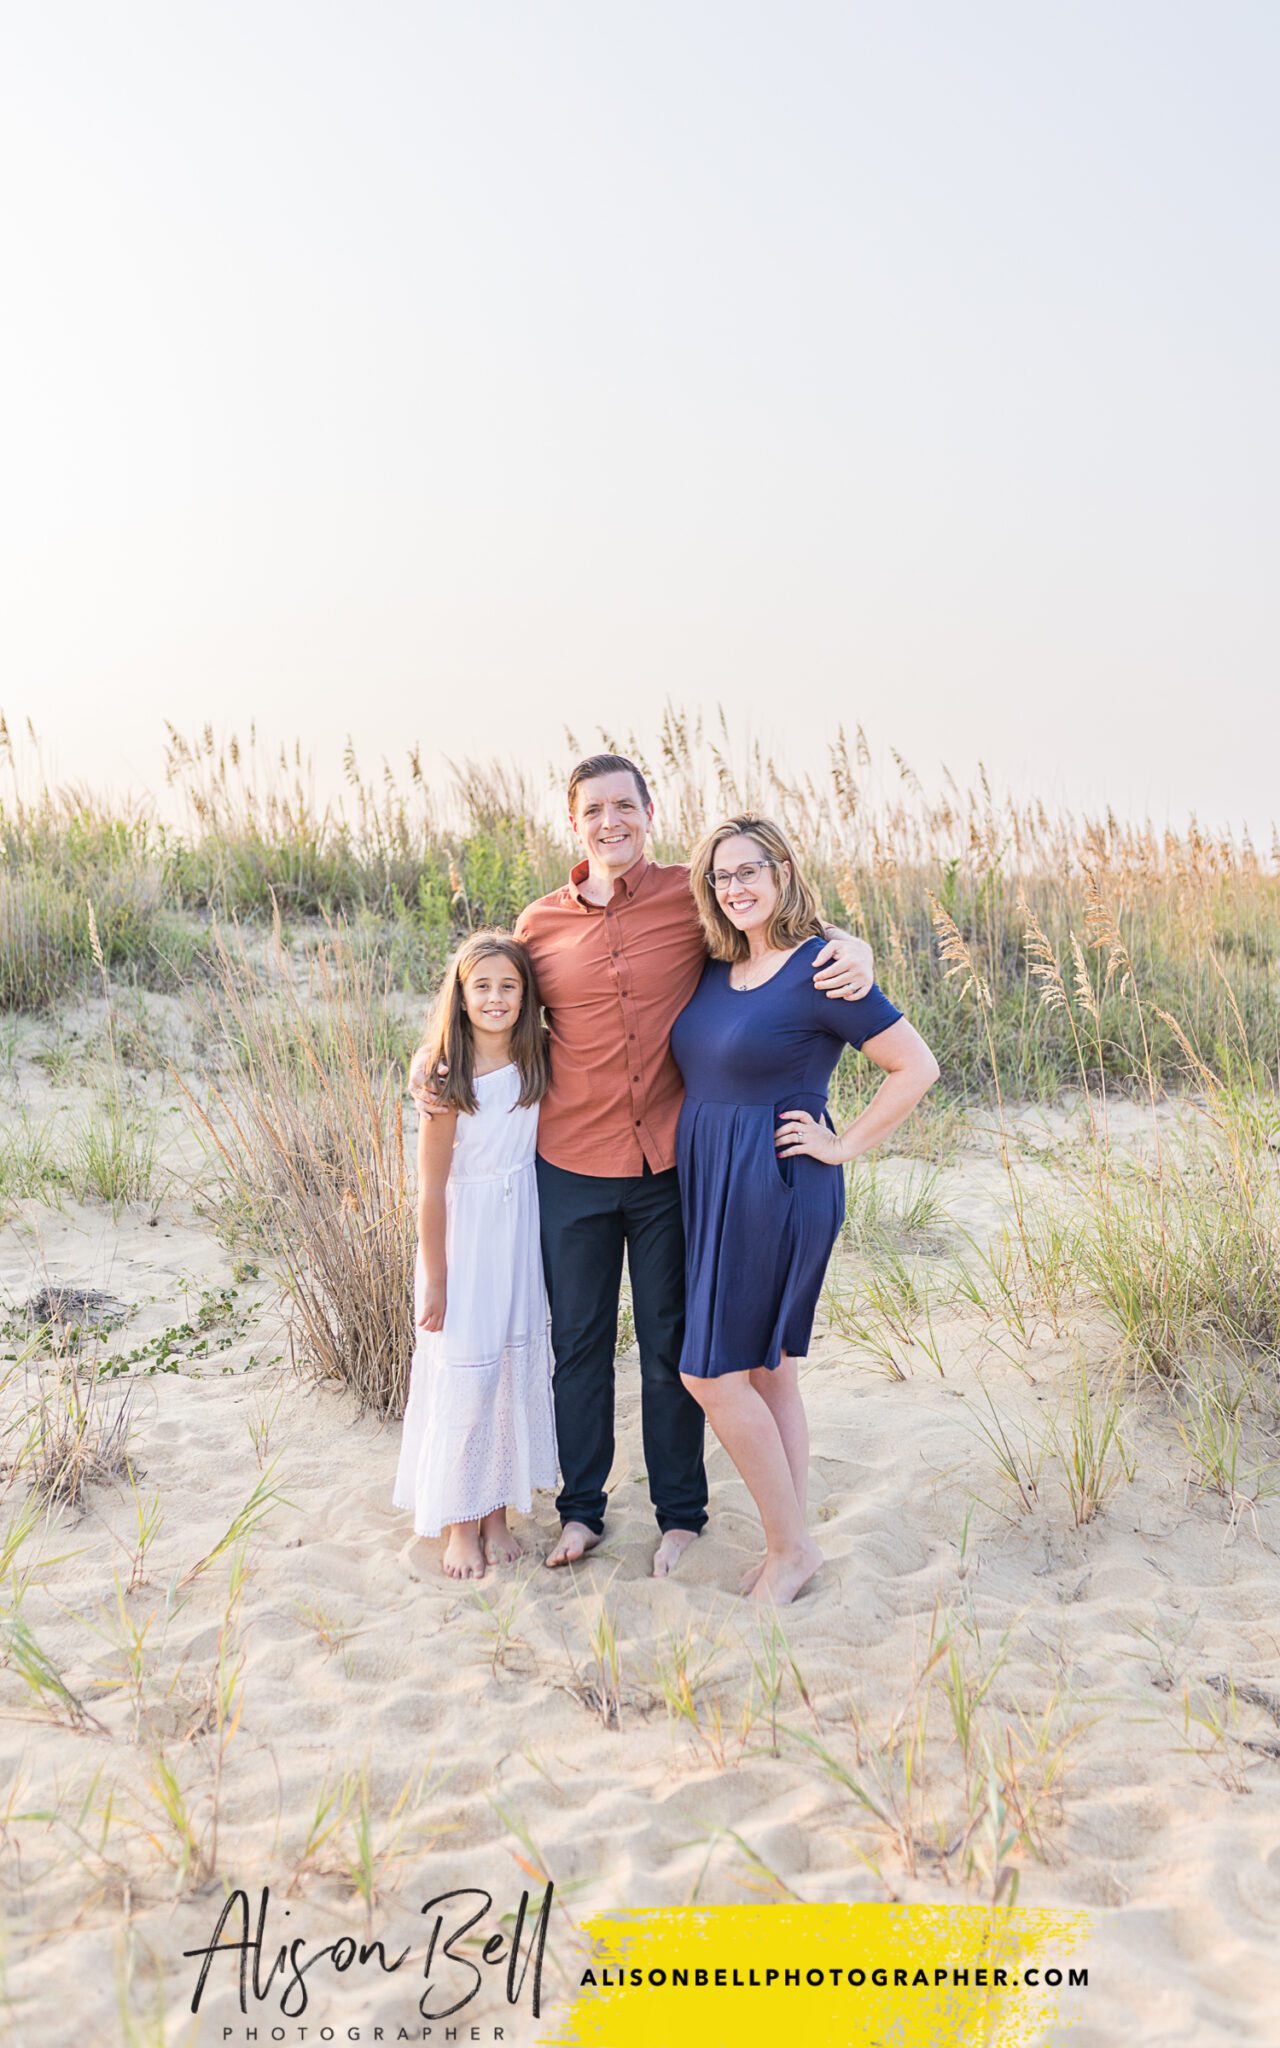 Family Photographers in Virginia beach - alison bell, photographer